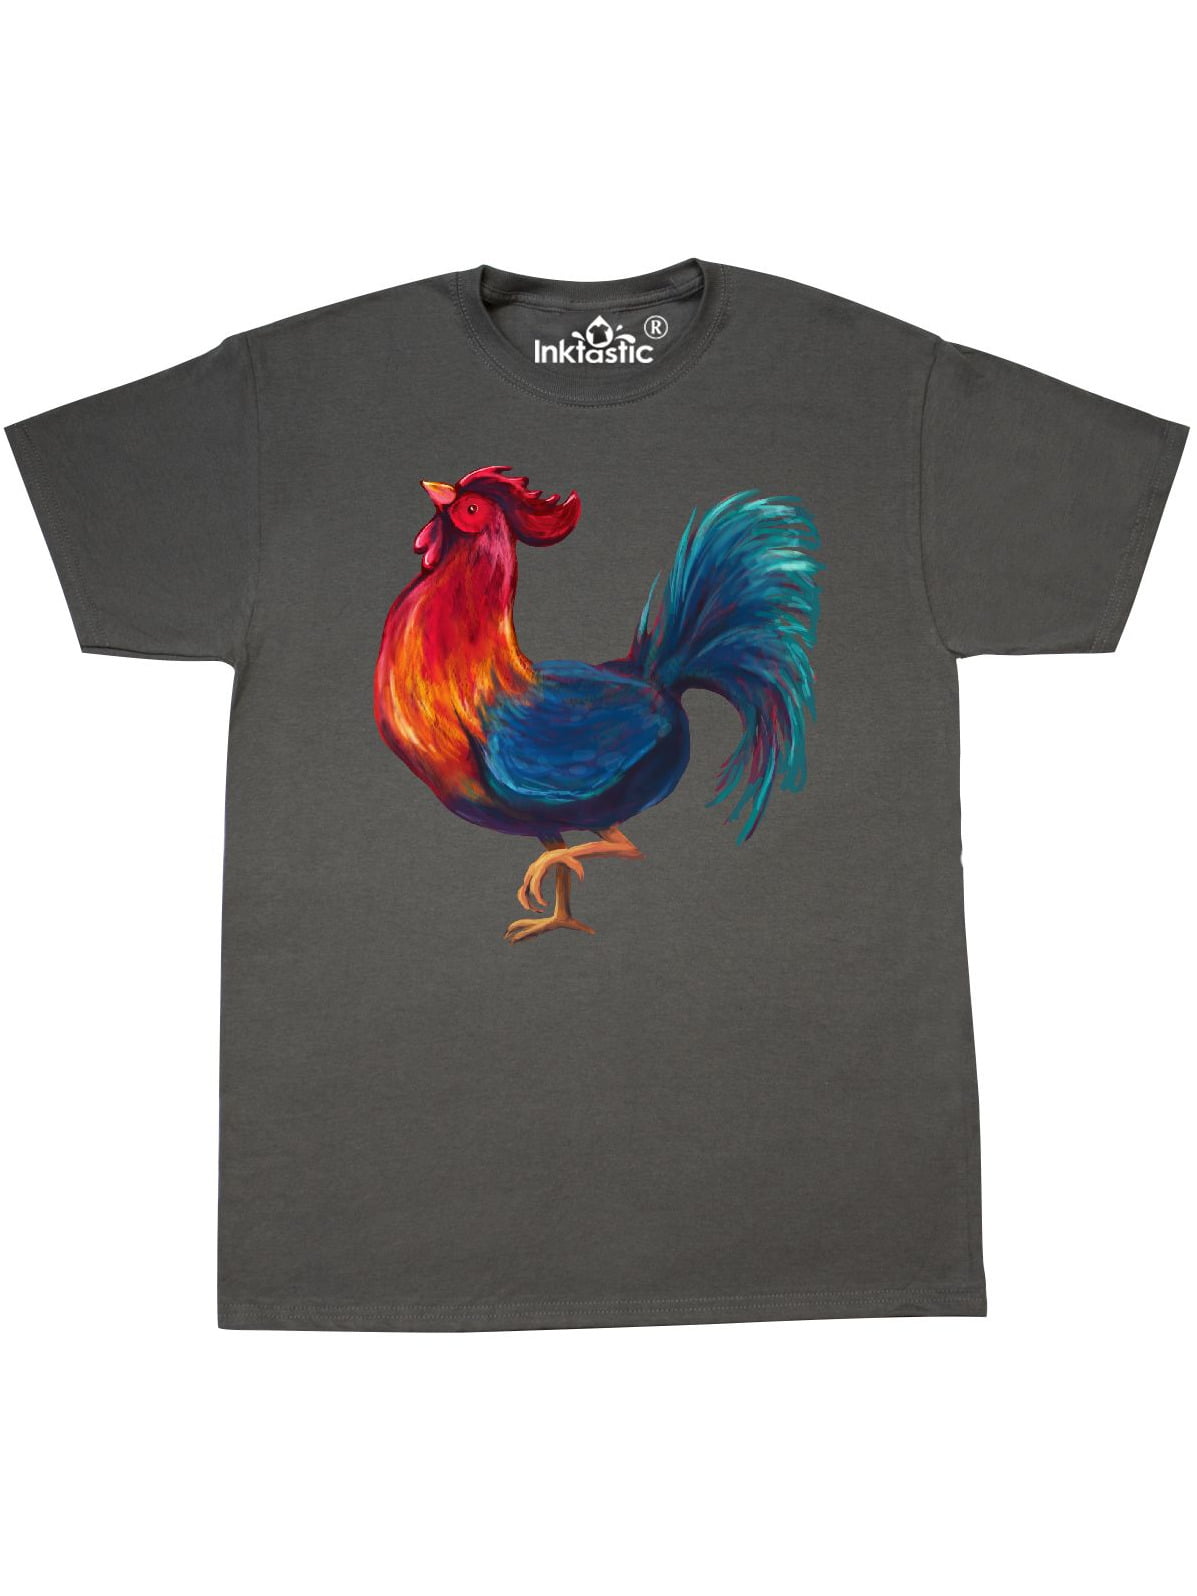 INKtastic - Year of the Rooster T-Shirt - Walmart.com - Walmart.com